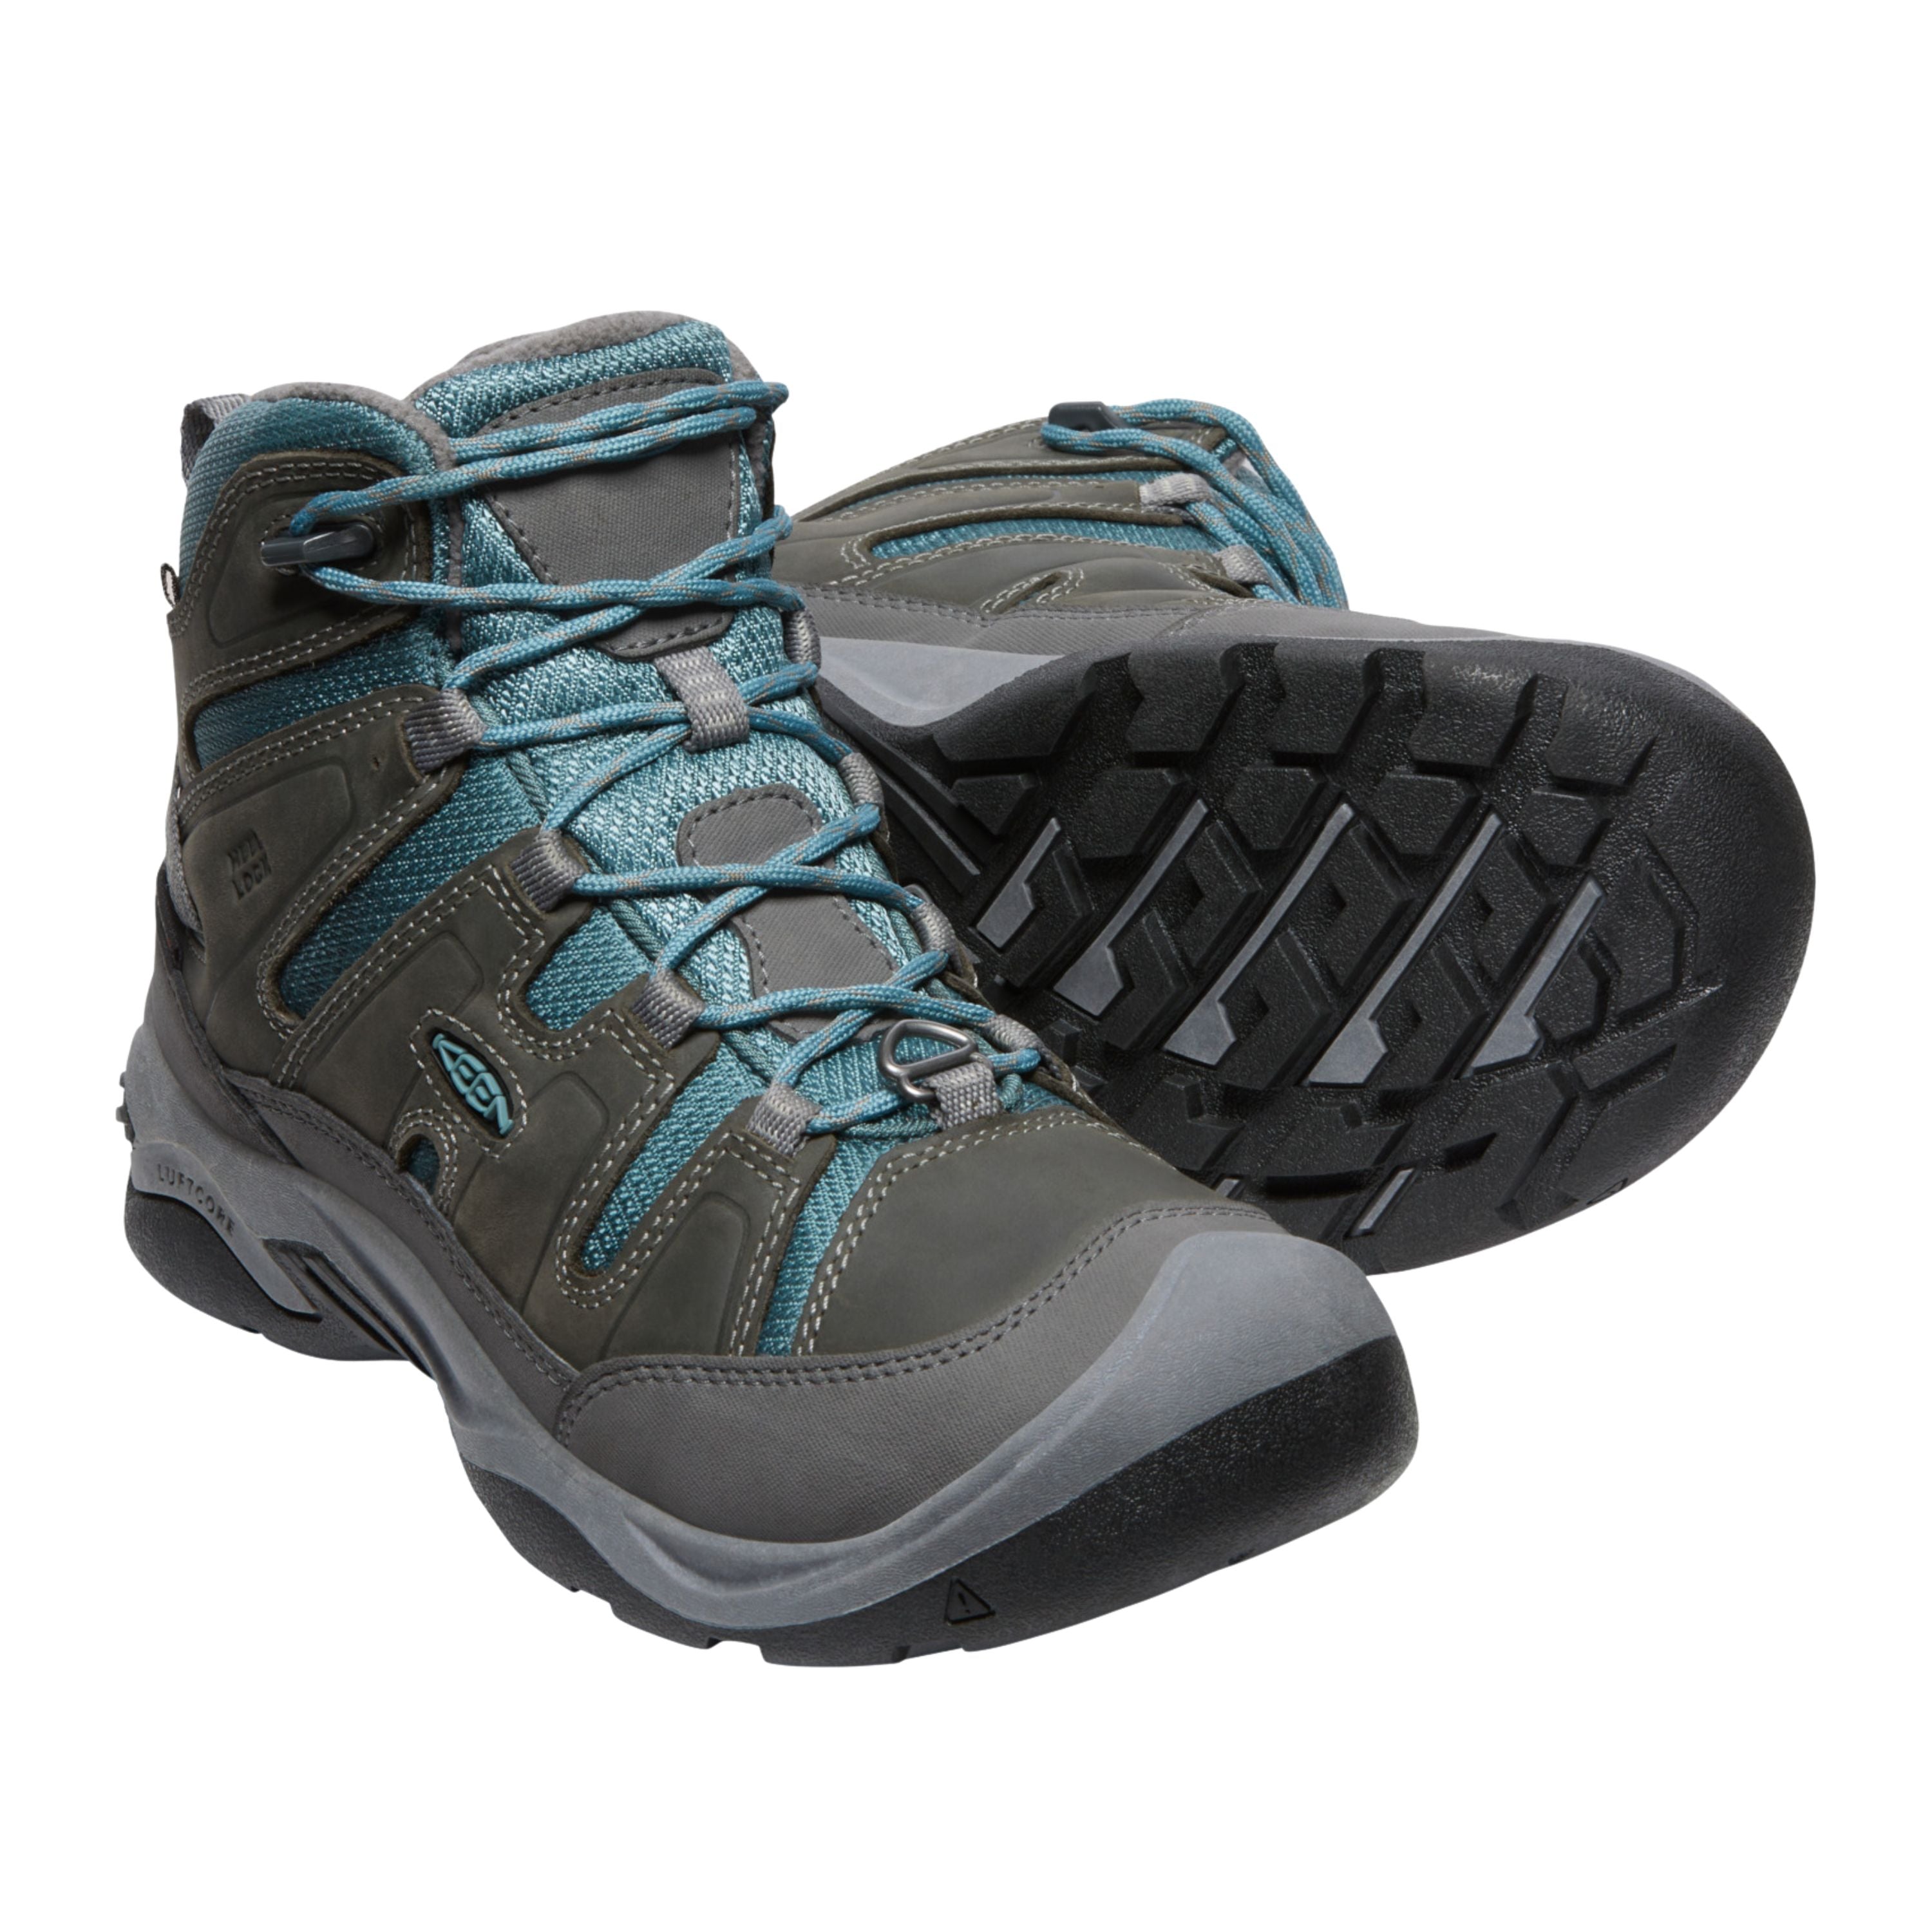 "Circadia MID Polar" Insulated hiking boots - Women's